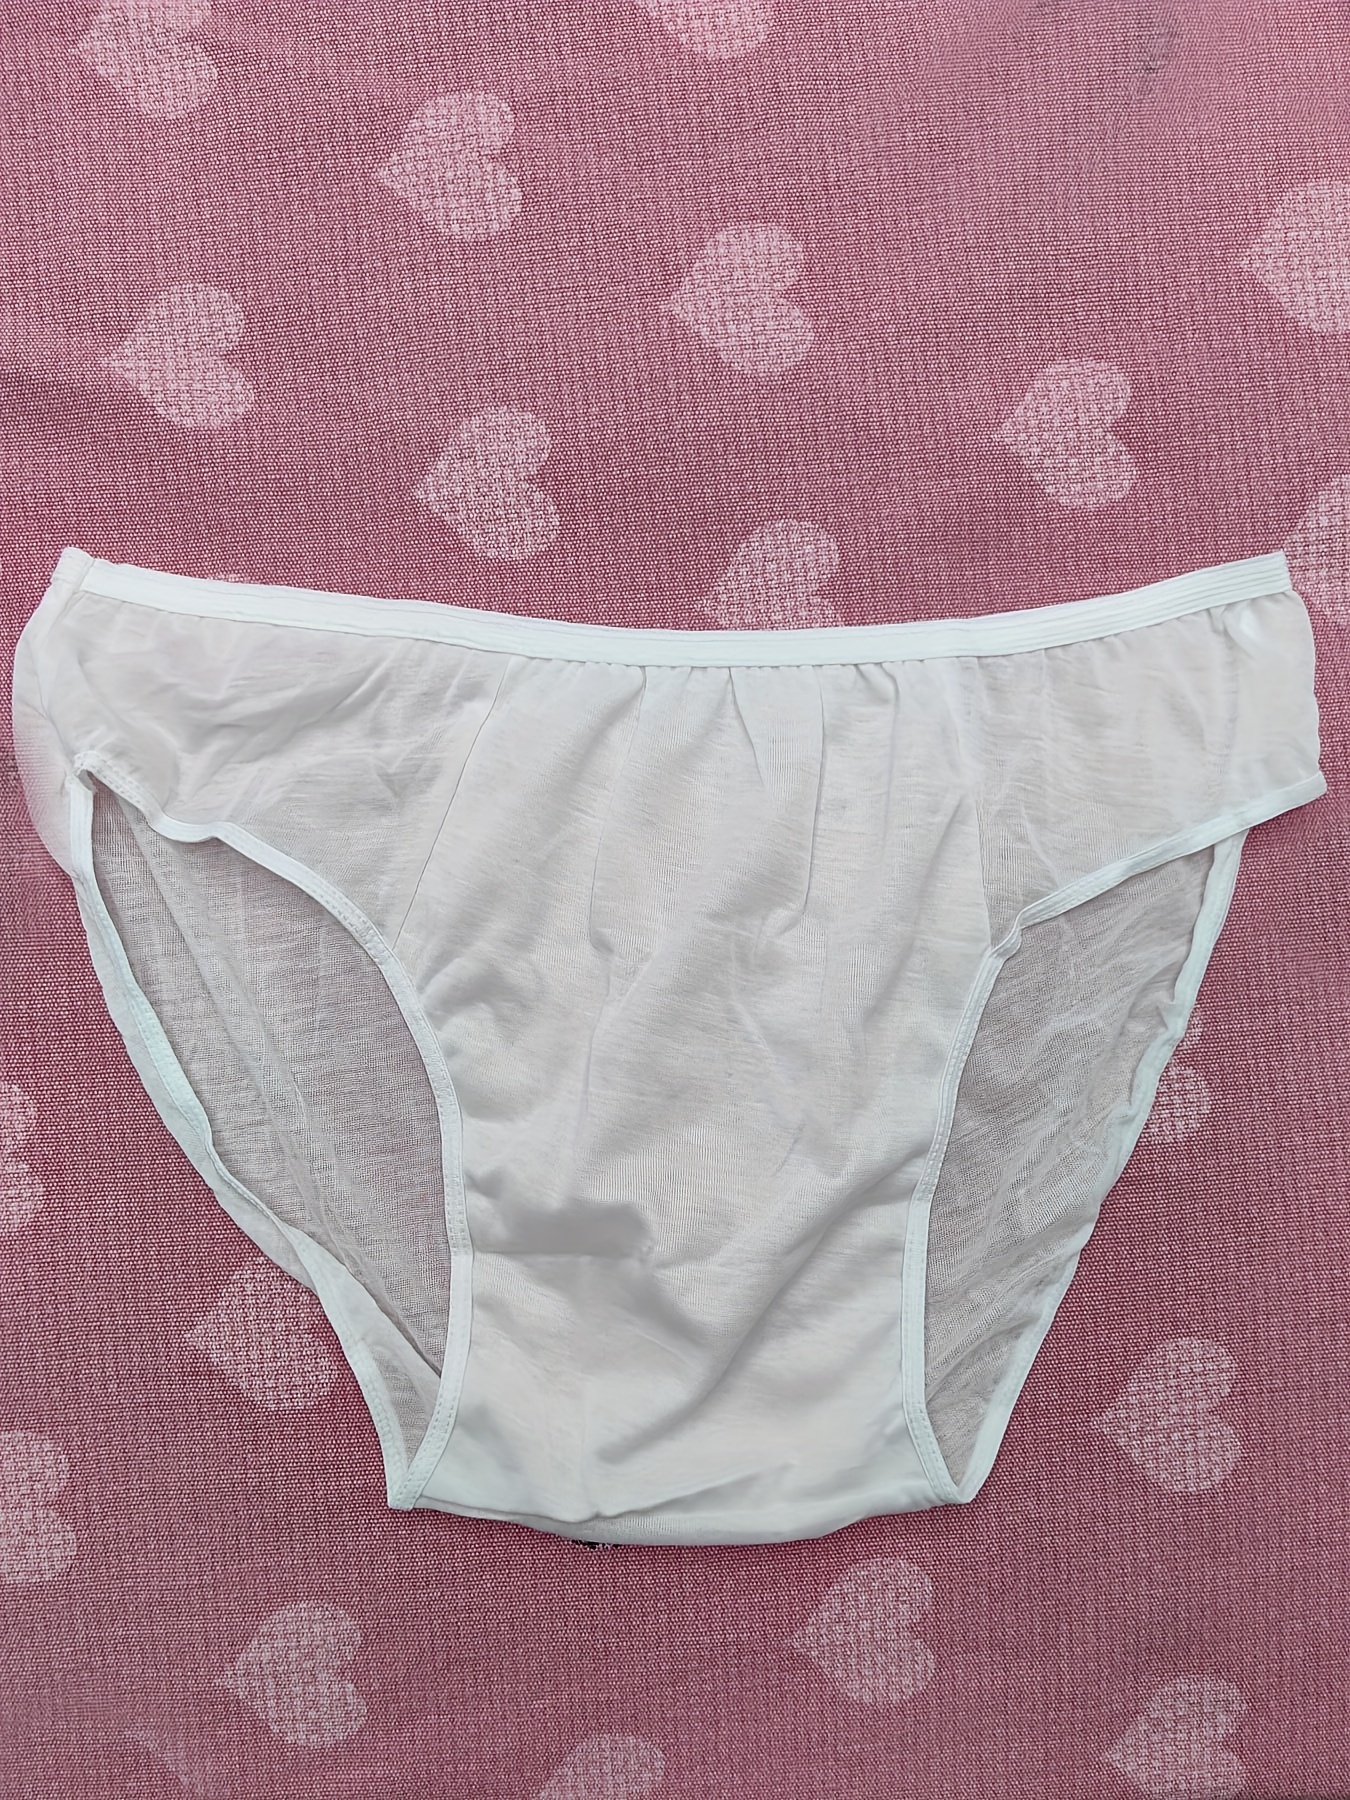 Disposable Mens Panties Cotton, Cotton Maternity Underwear